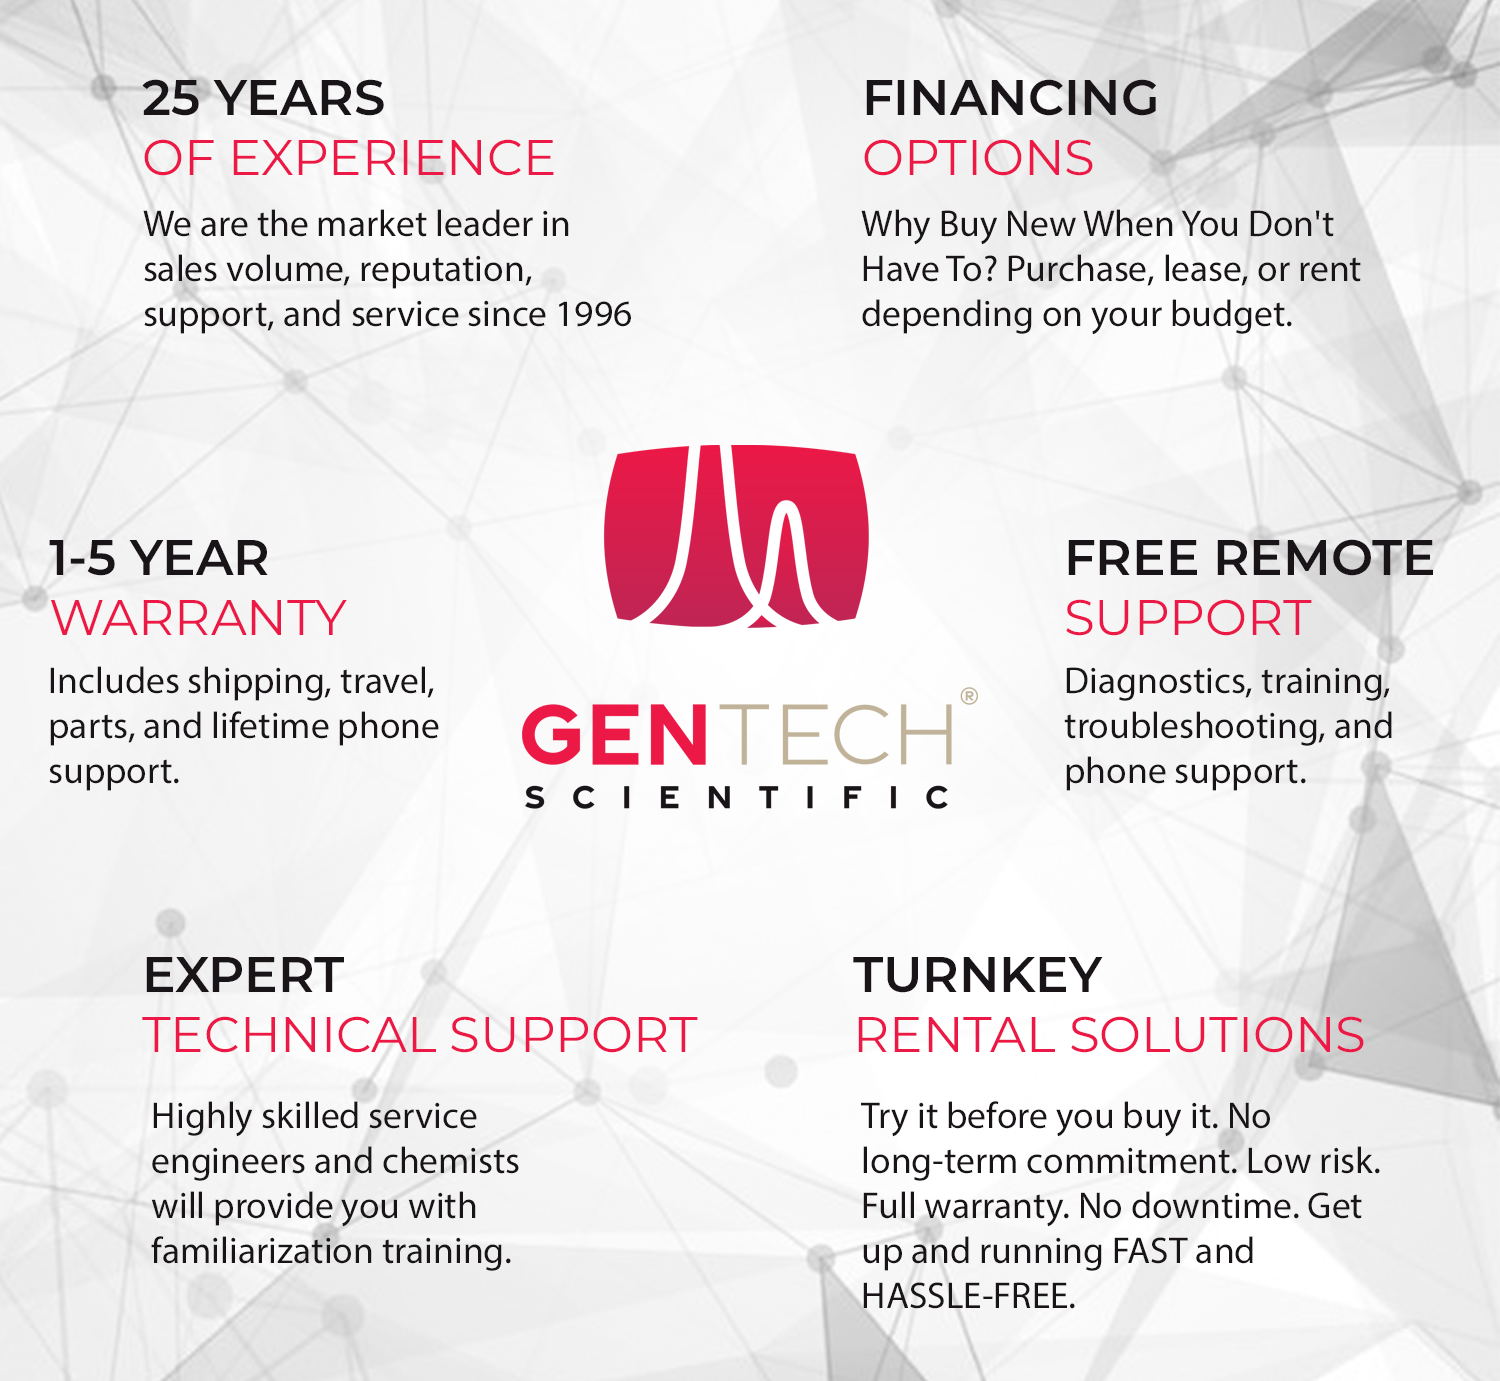 Why Choose GenTech?